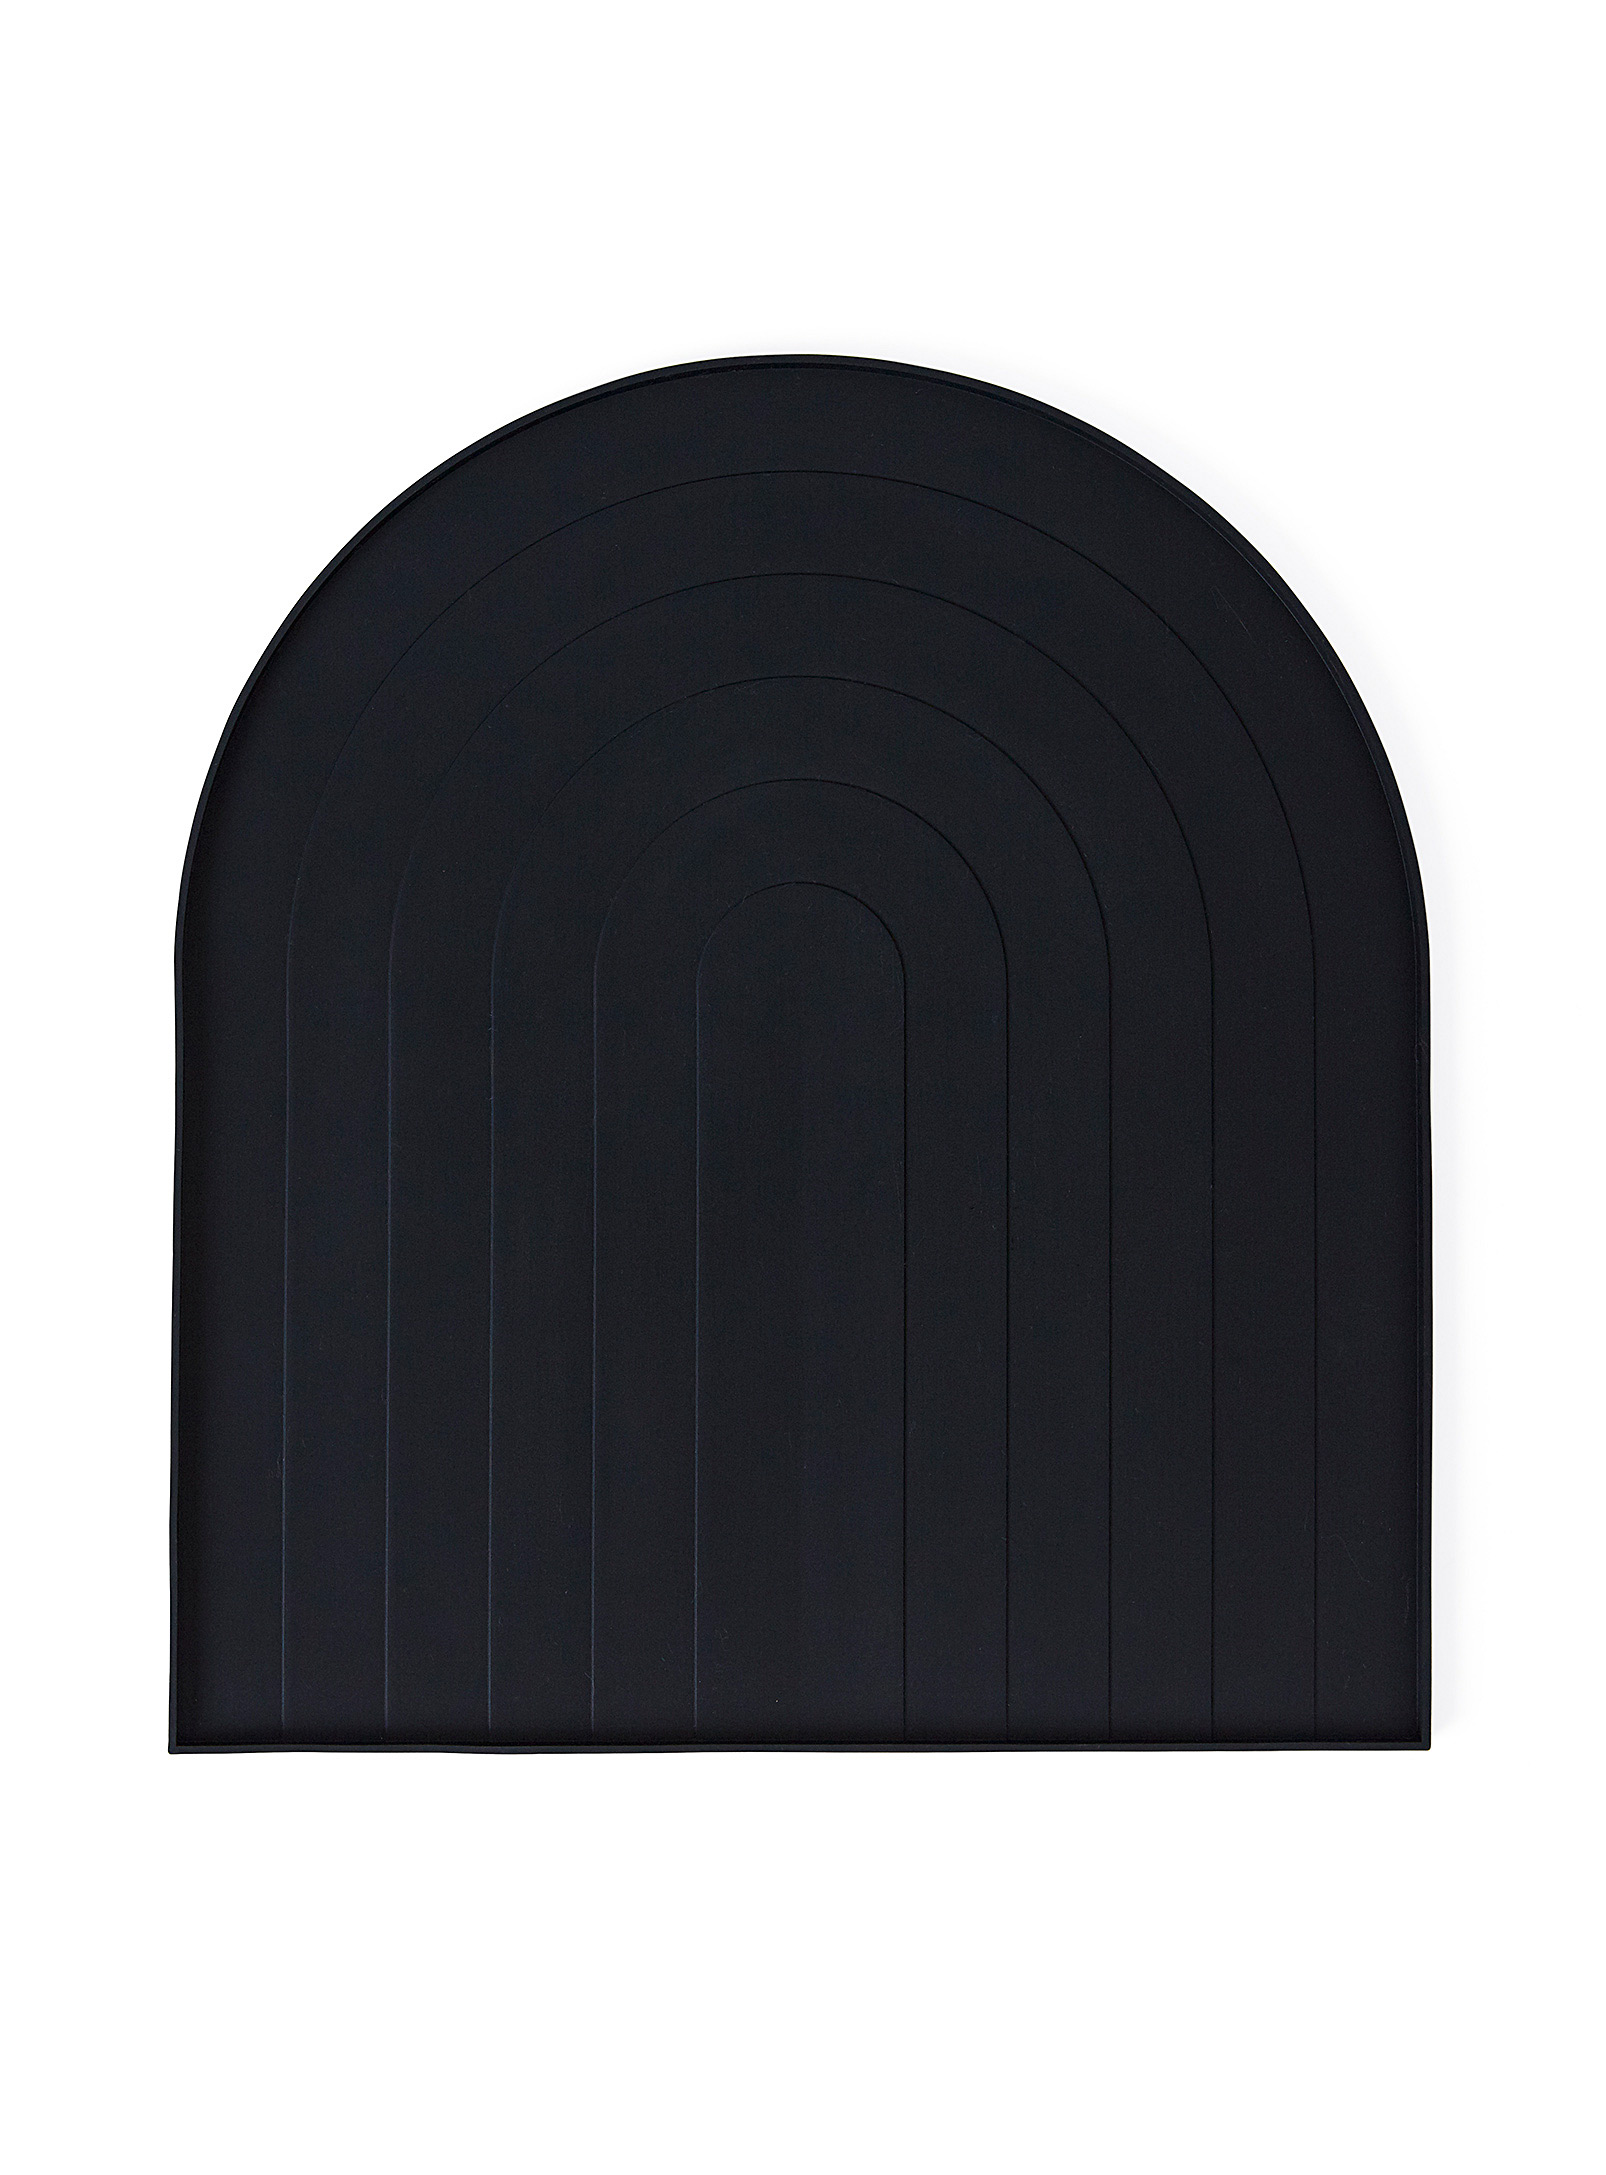 Oyoy Living Design Arch Dish Drying Mat In Black